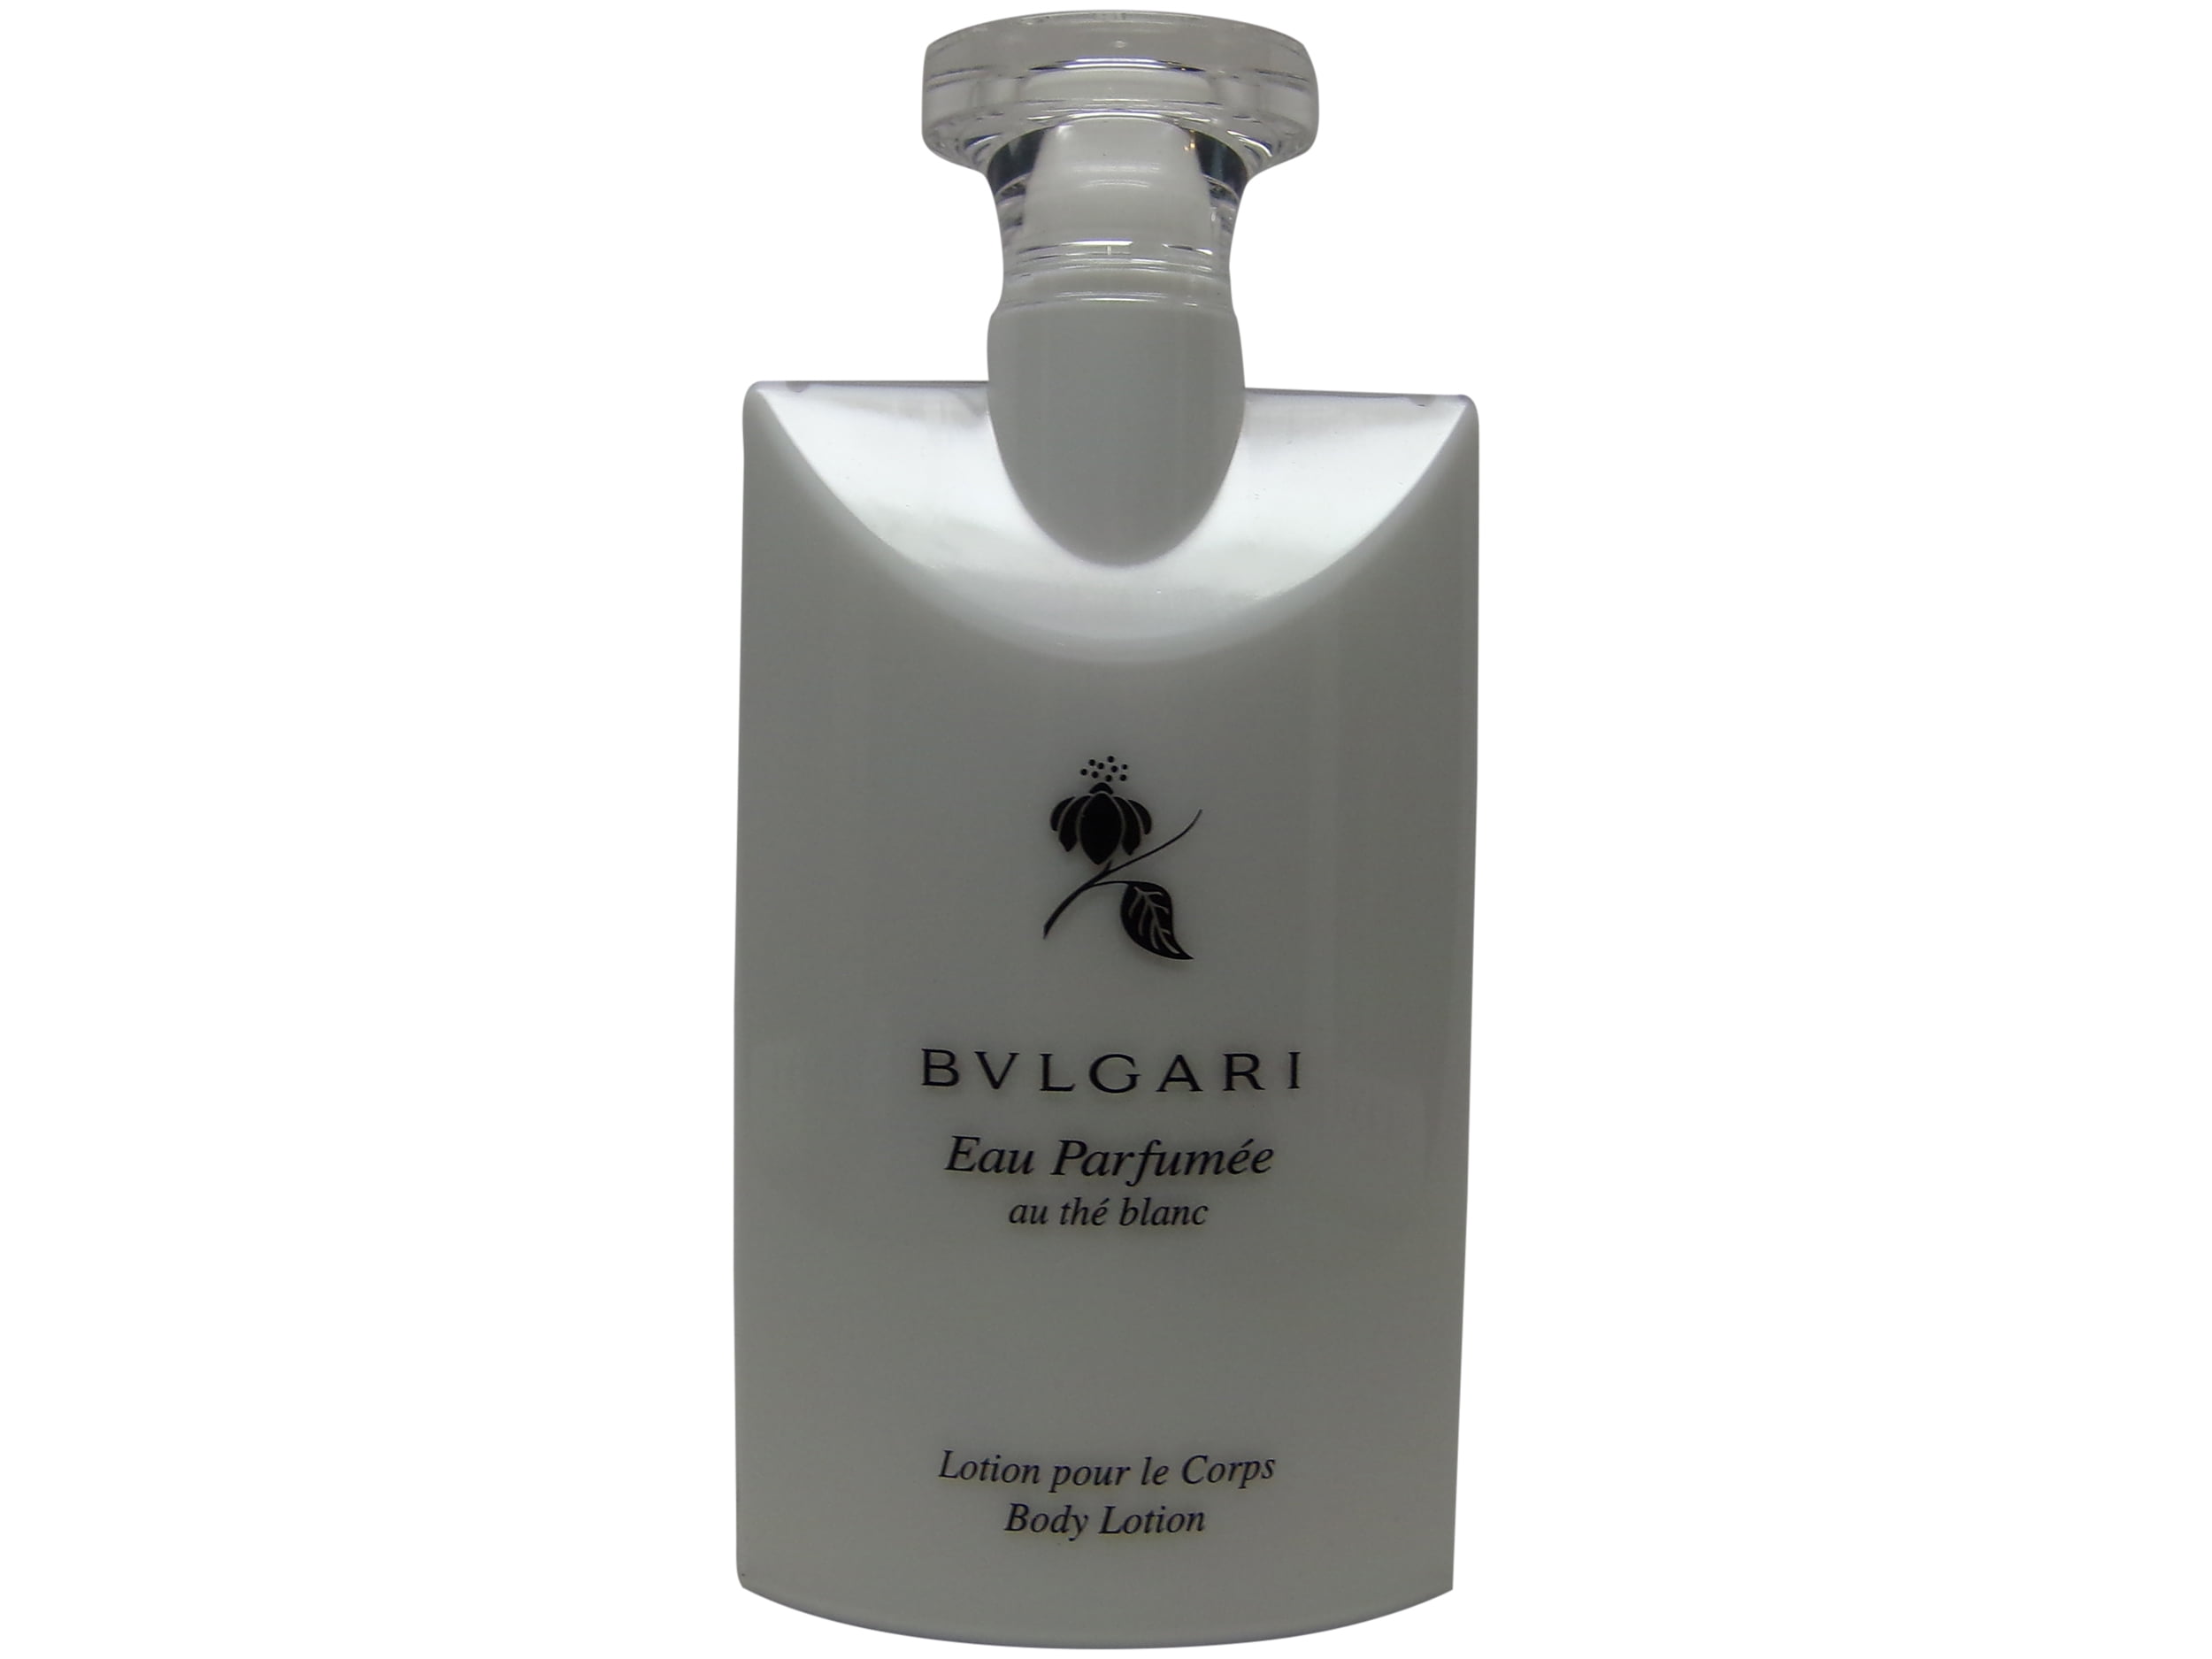 Bvlgari Eau Parfumée Au the Blanc (White Tea) Body Lotion 200ml / 6.8oz.